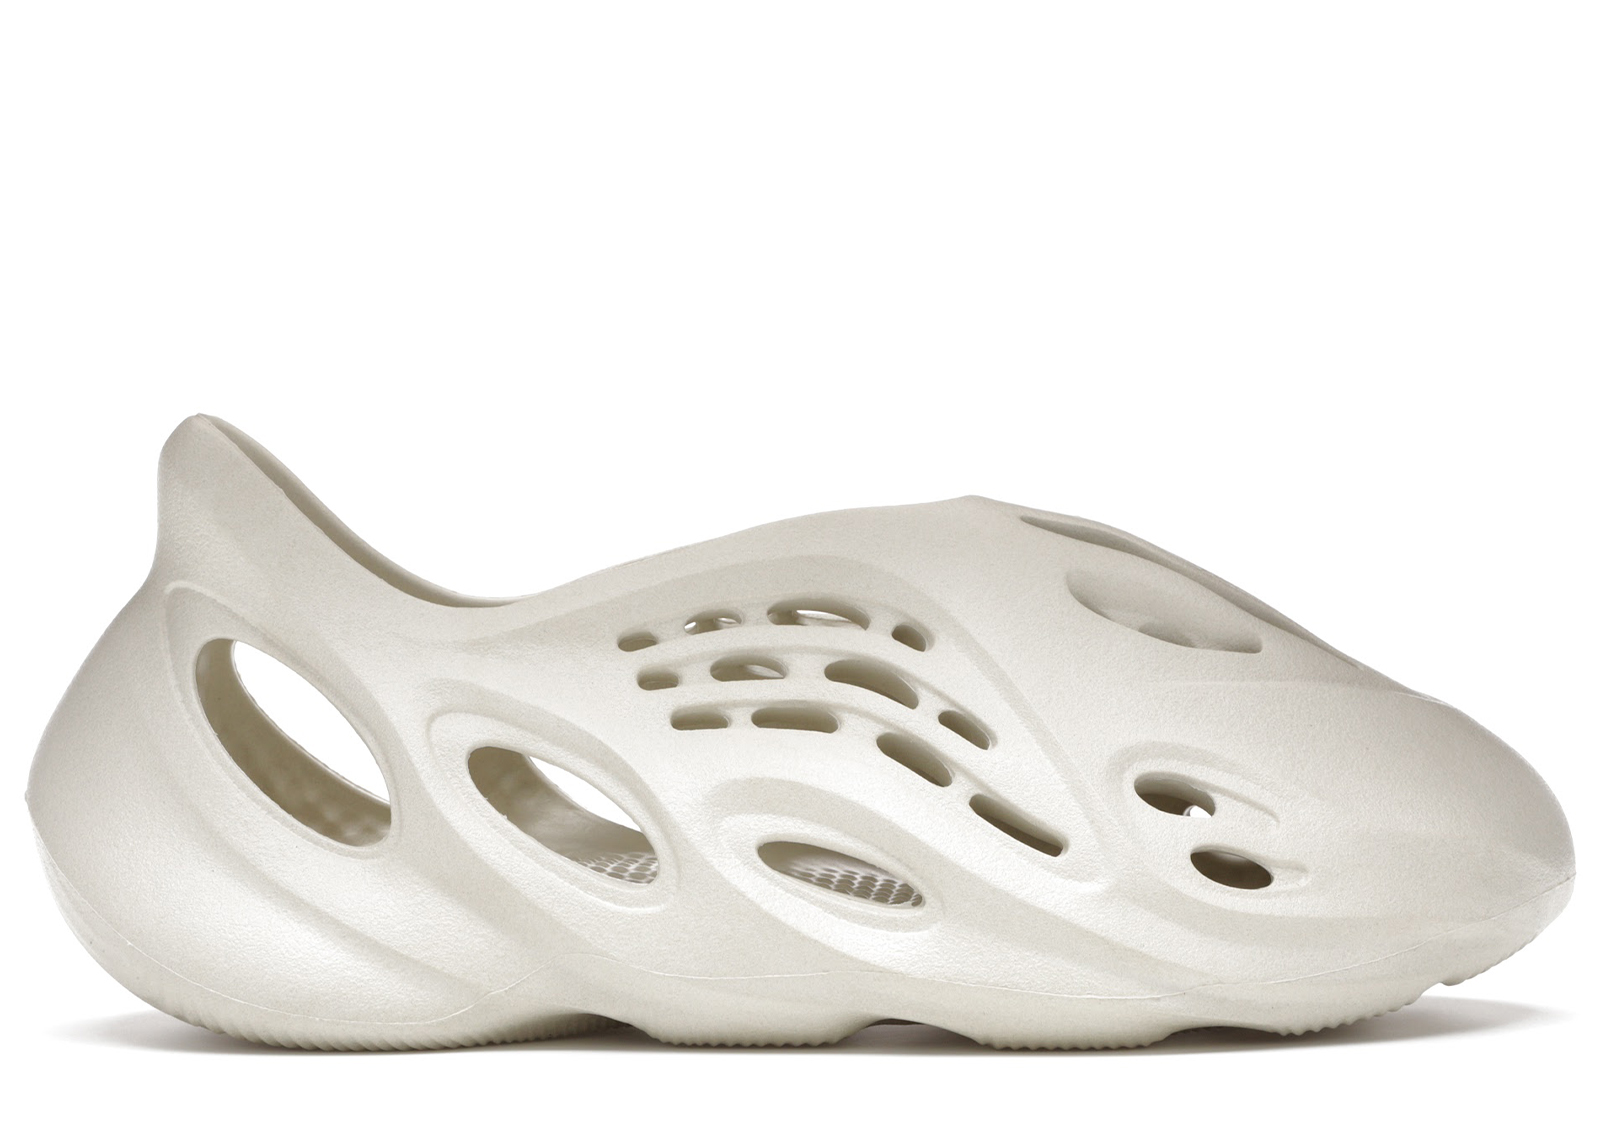 adidas YEEZY Foam Runner "Mx Sand Grey"